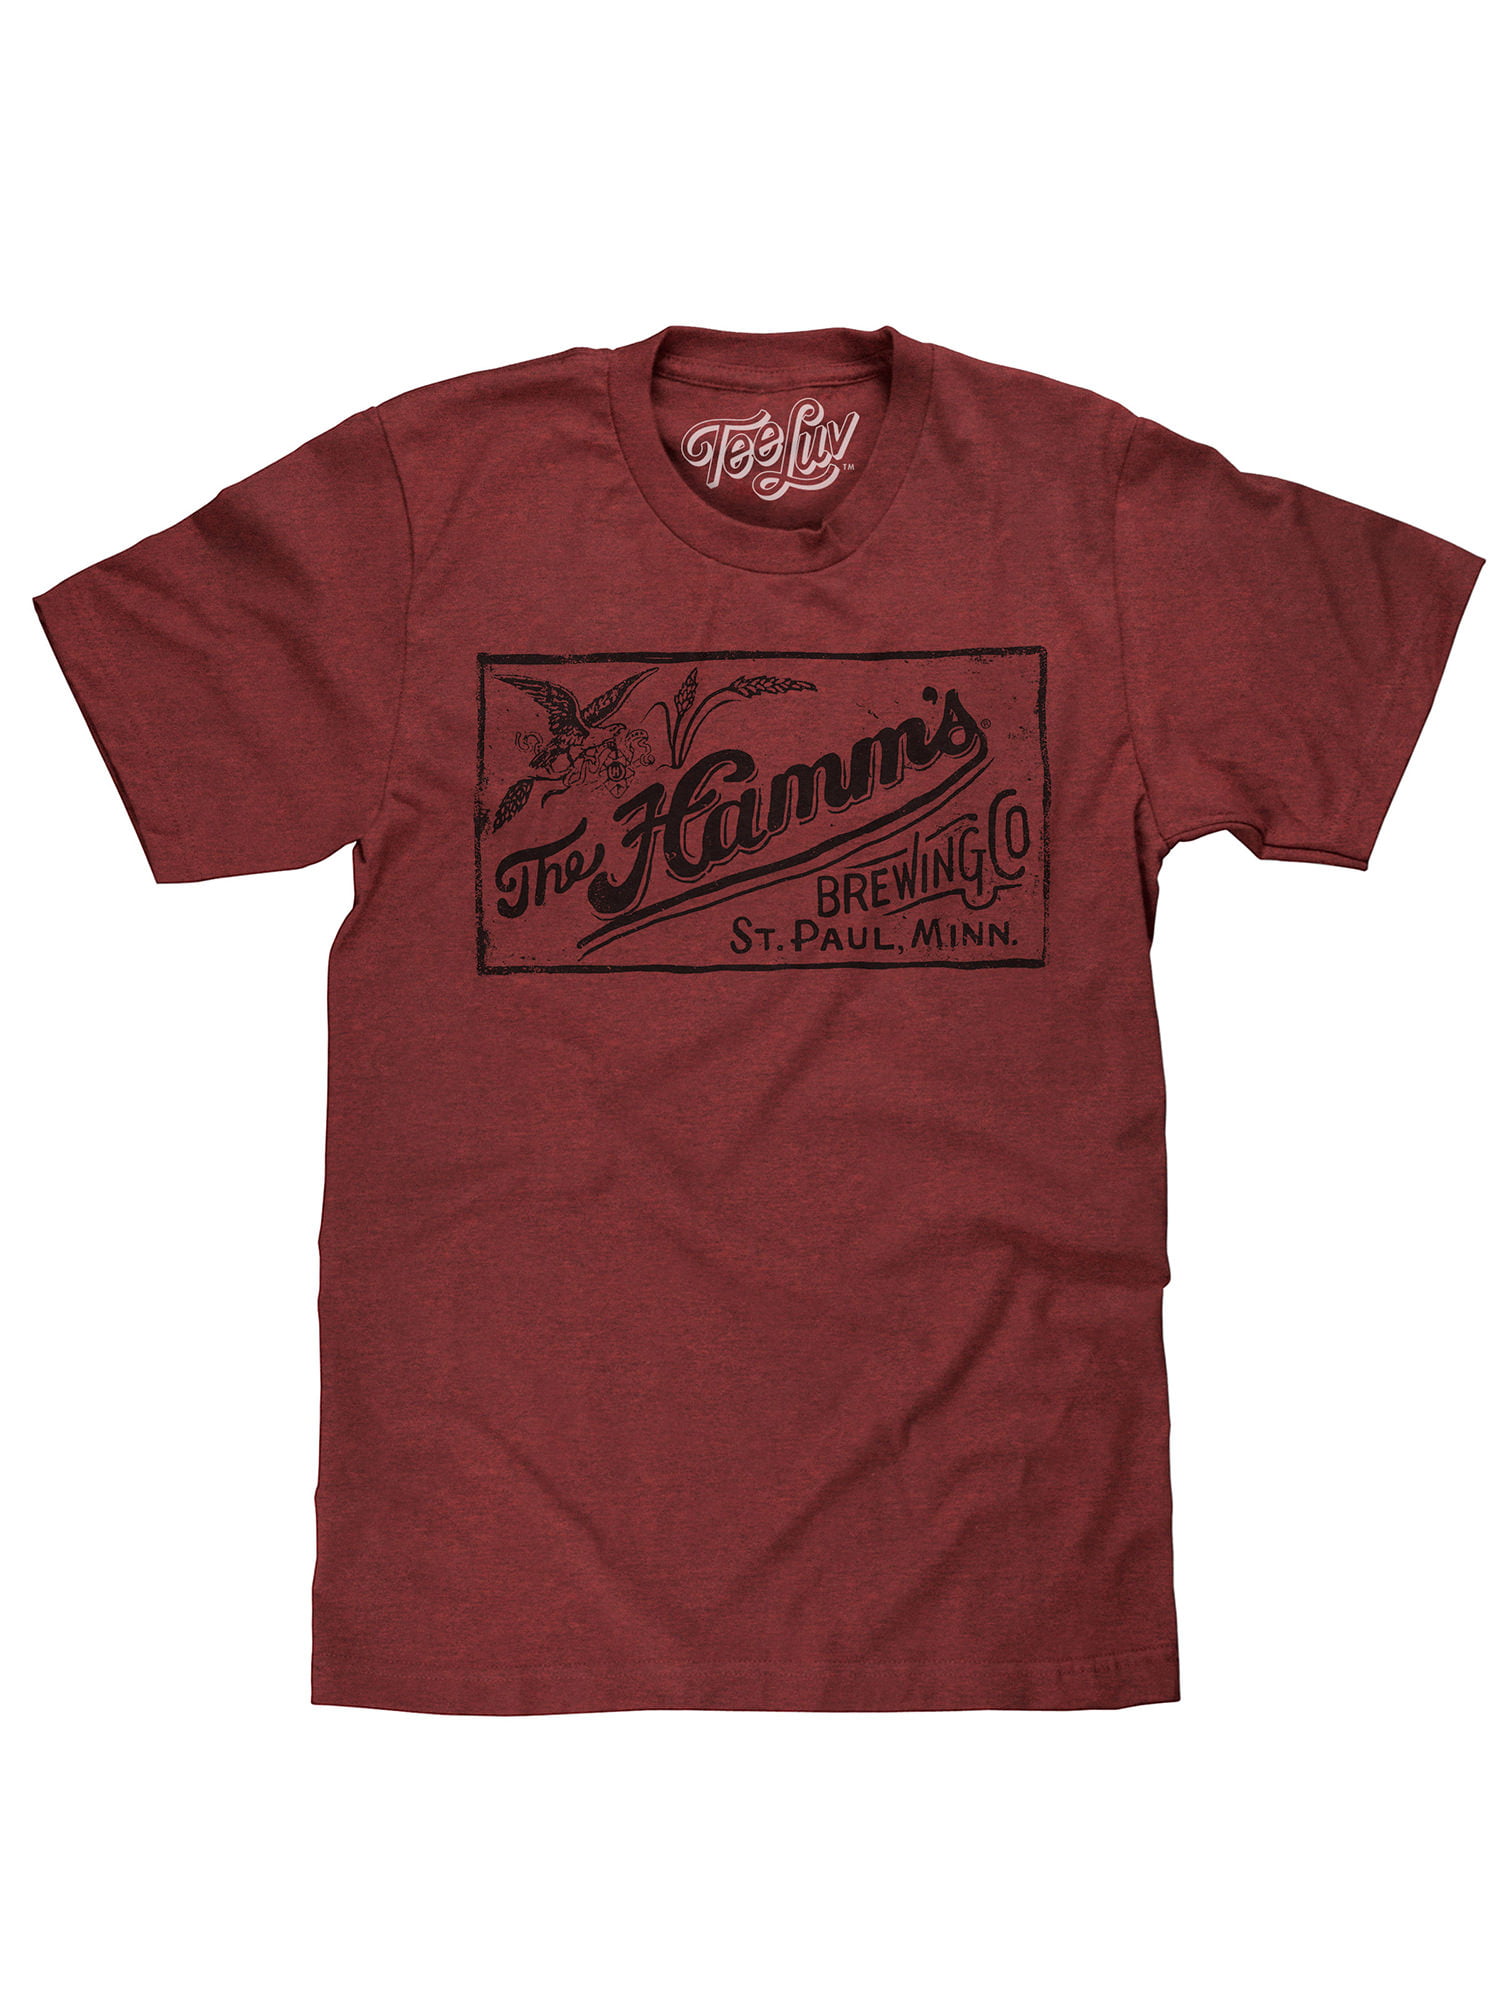 Hamm's Brewing Company T-Shirt - Hamms Beer Shirt (X-Large) - Walmart.com